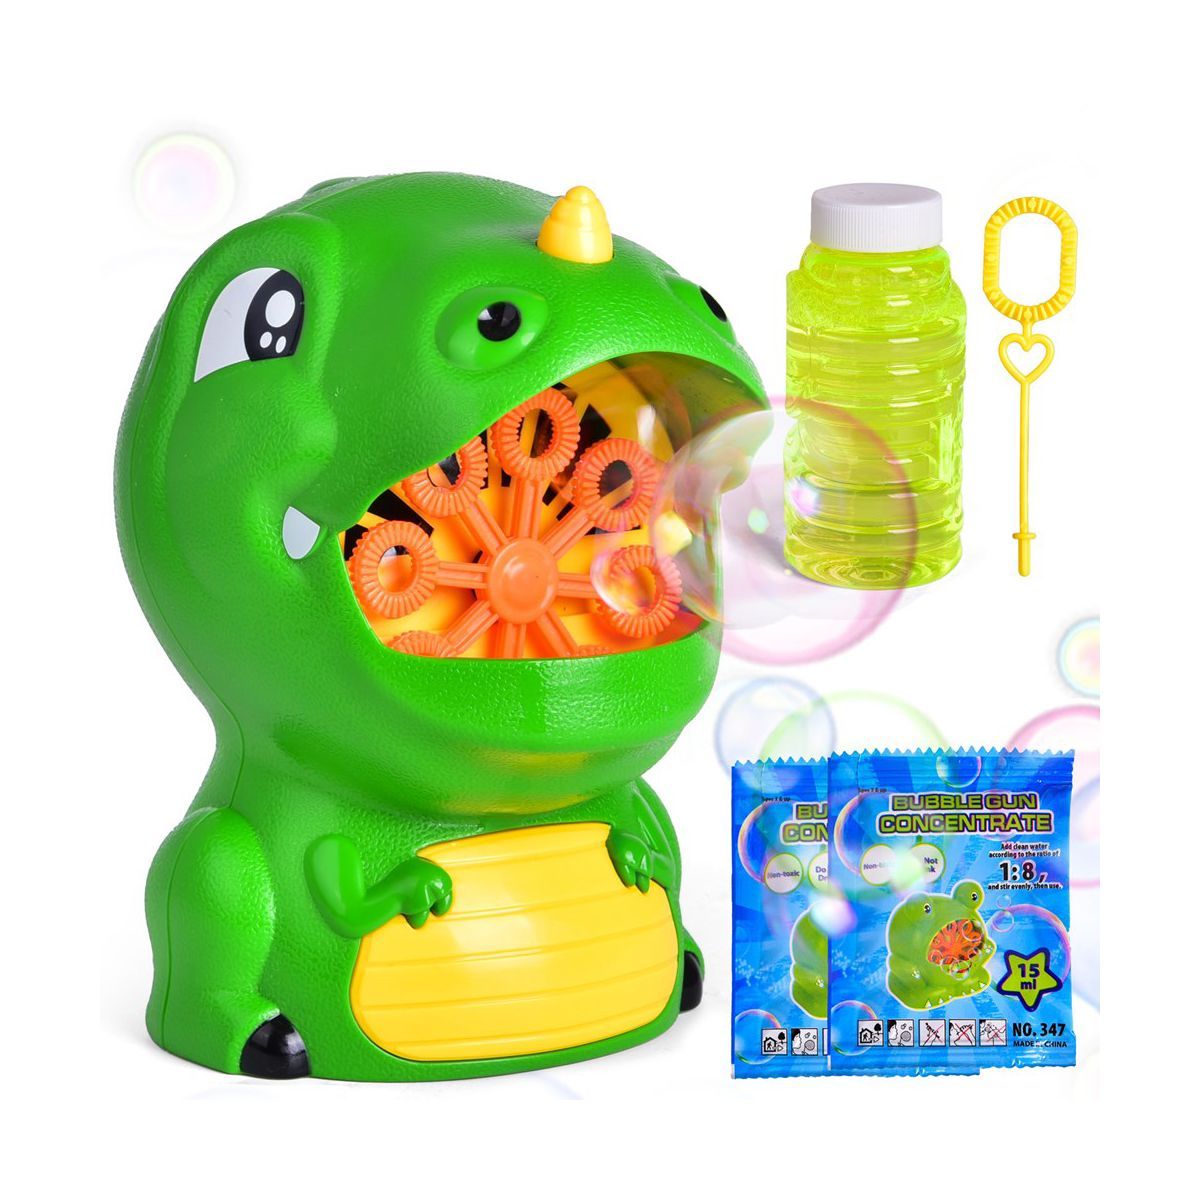 Fun Little Toys Dinosaur Bubble Machine | Target